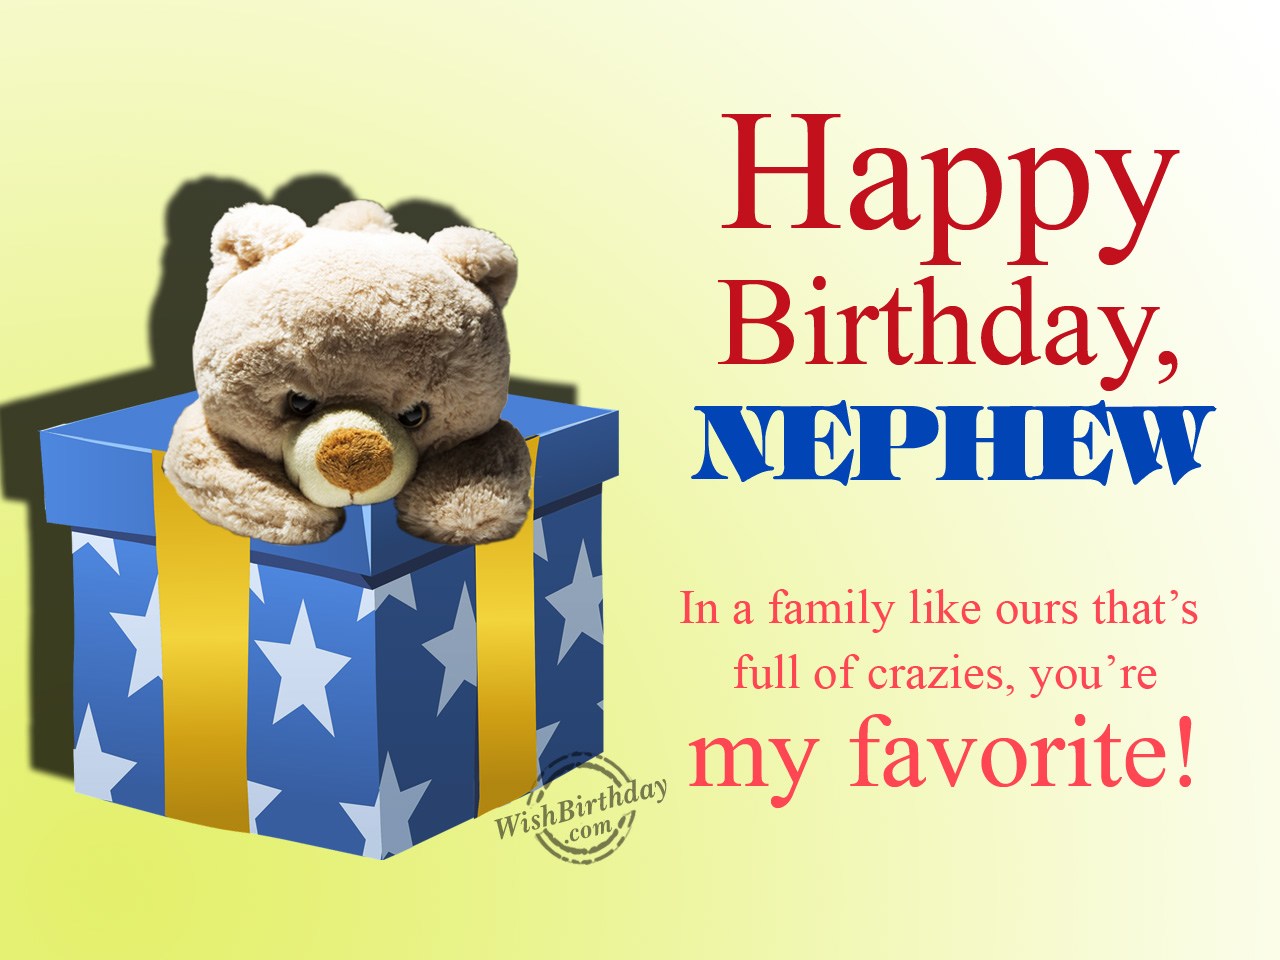 Happy birthday Nephew - WishBirthday.com